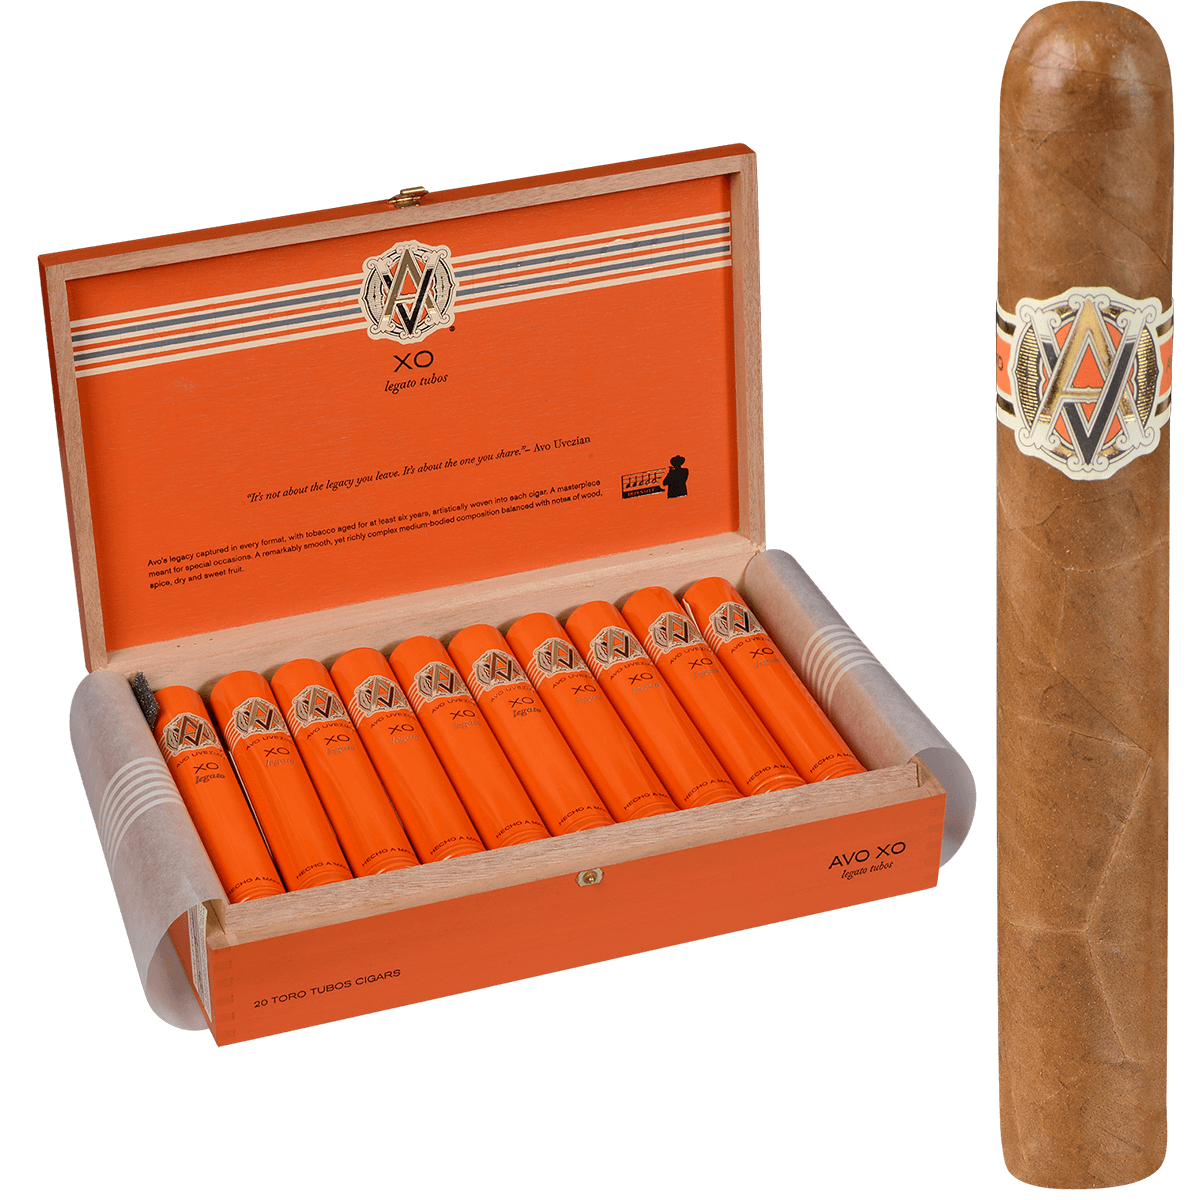 AVO Cigars XO Legato Tubos 20 Ct. Box 6.00X54